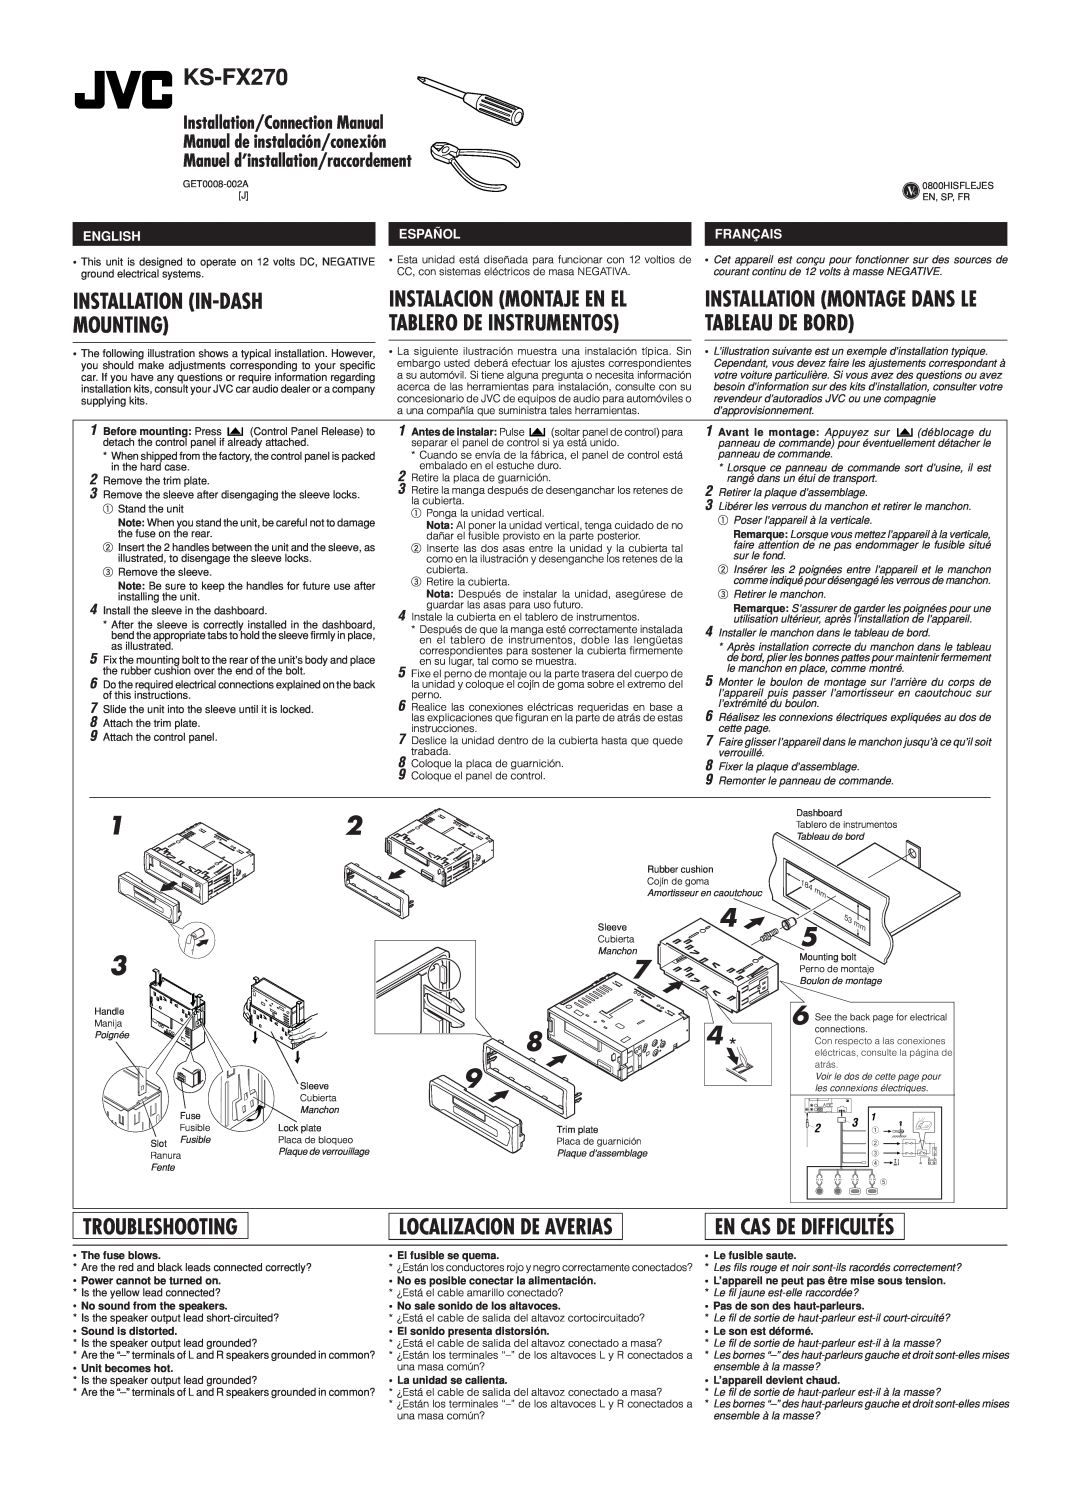 JVC KS-FX270 manual Installation In-Dash Mounting, Troubleshooting, Localizacion De Averias, En Cas De Difficultés 